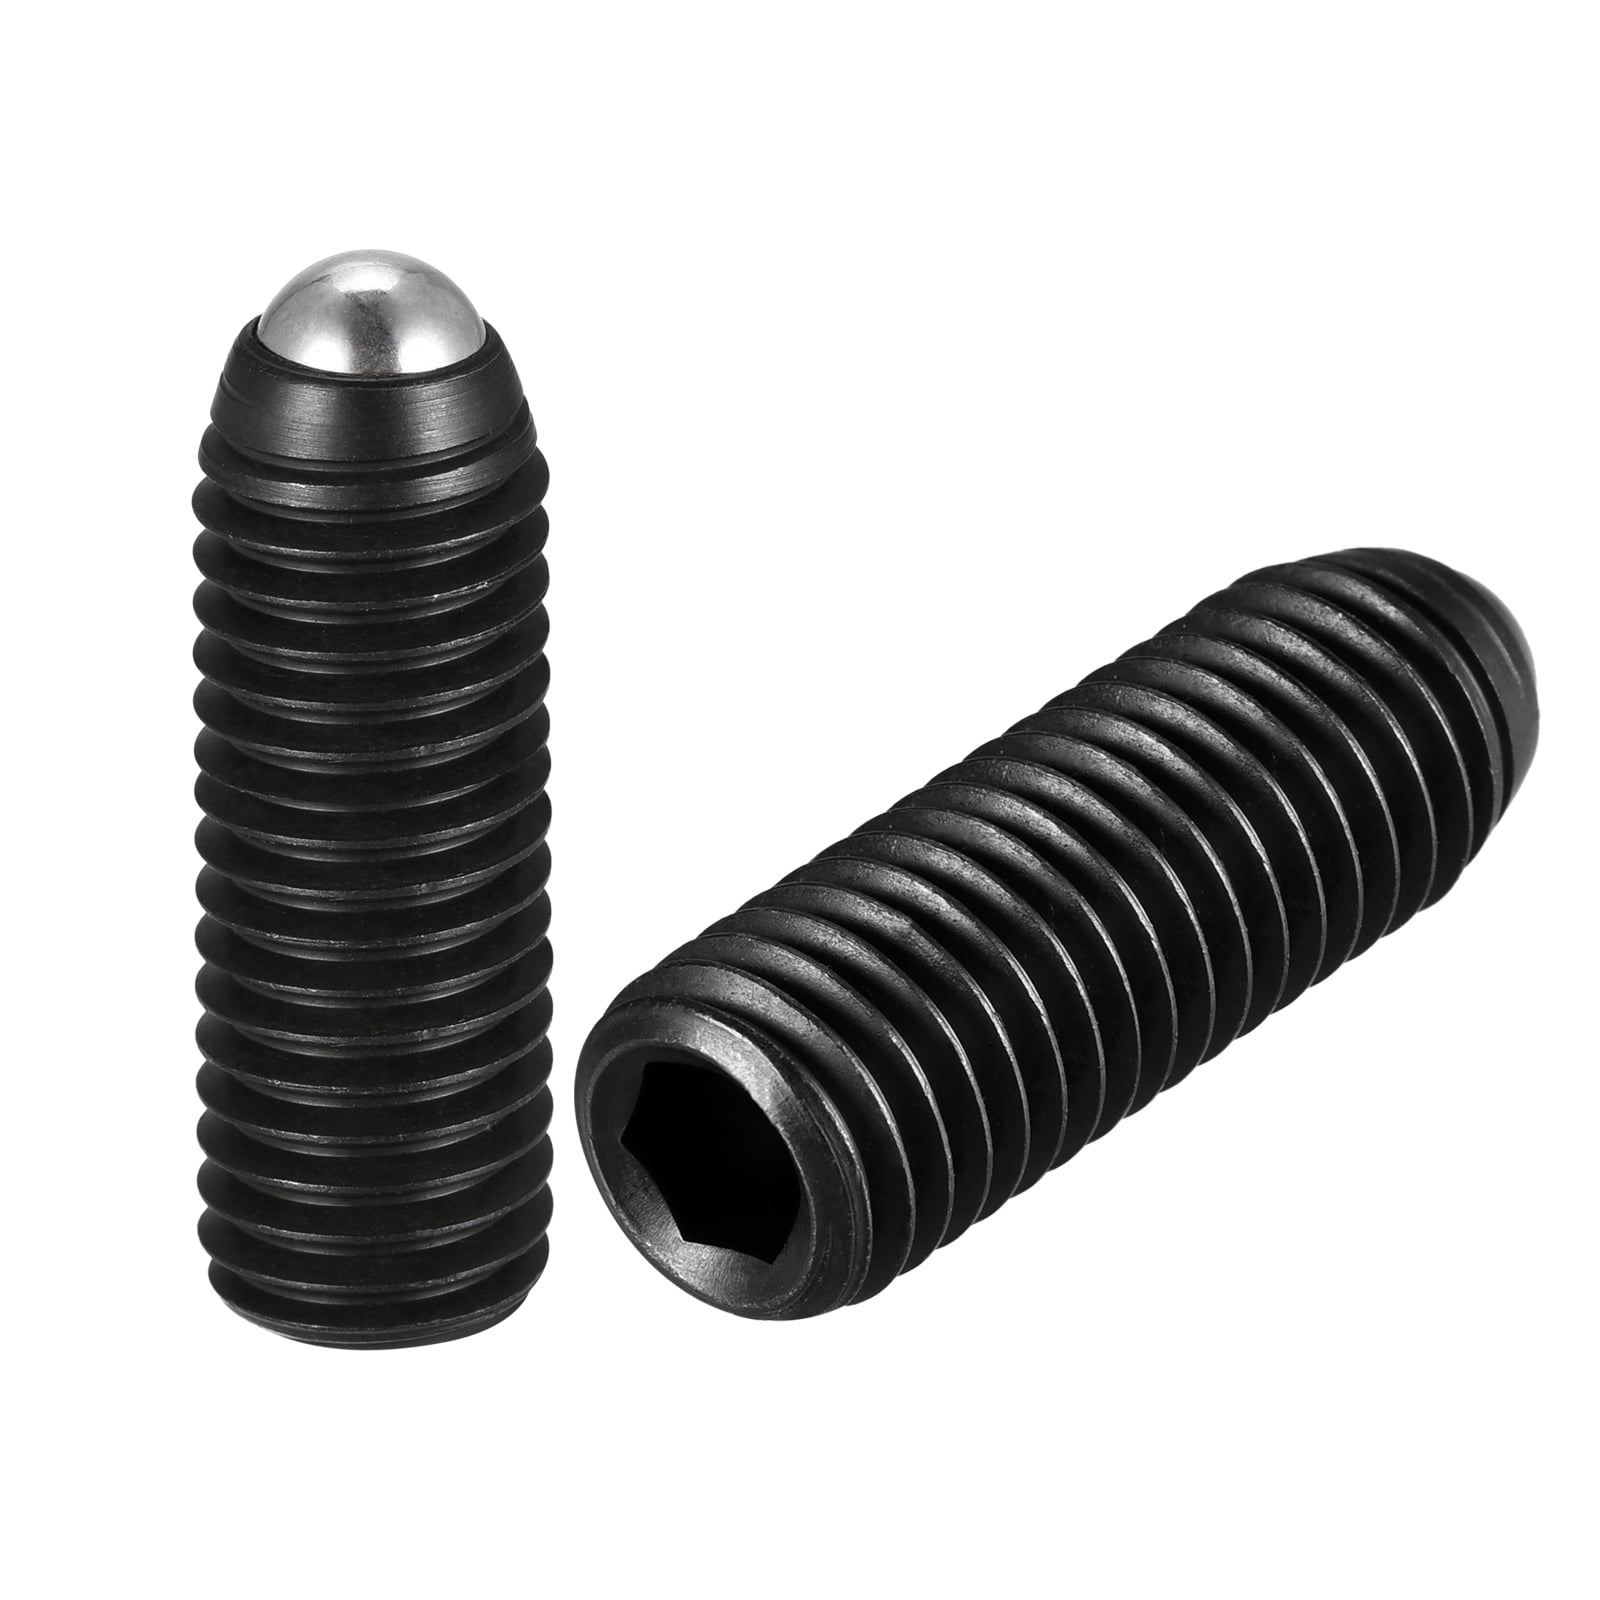 Uxcell Ball Point Set Screws, M6 x 20mm High Carbon Steel Metric Spring Hex  Socket Grub Screw 20 Pack